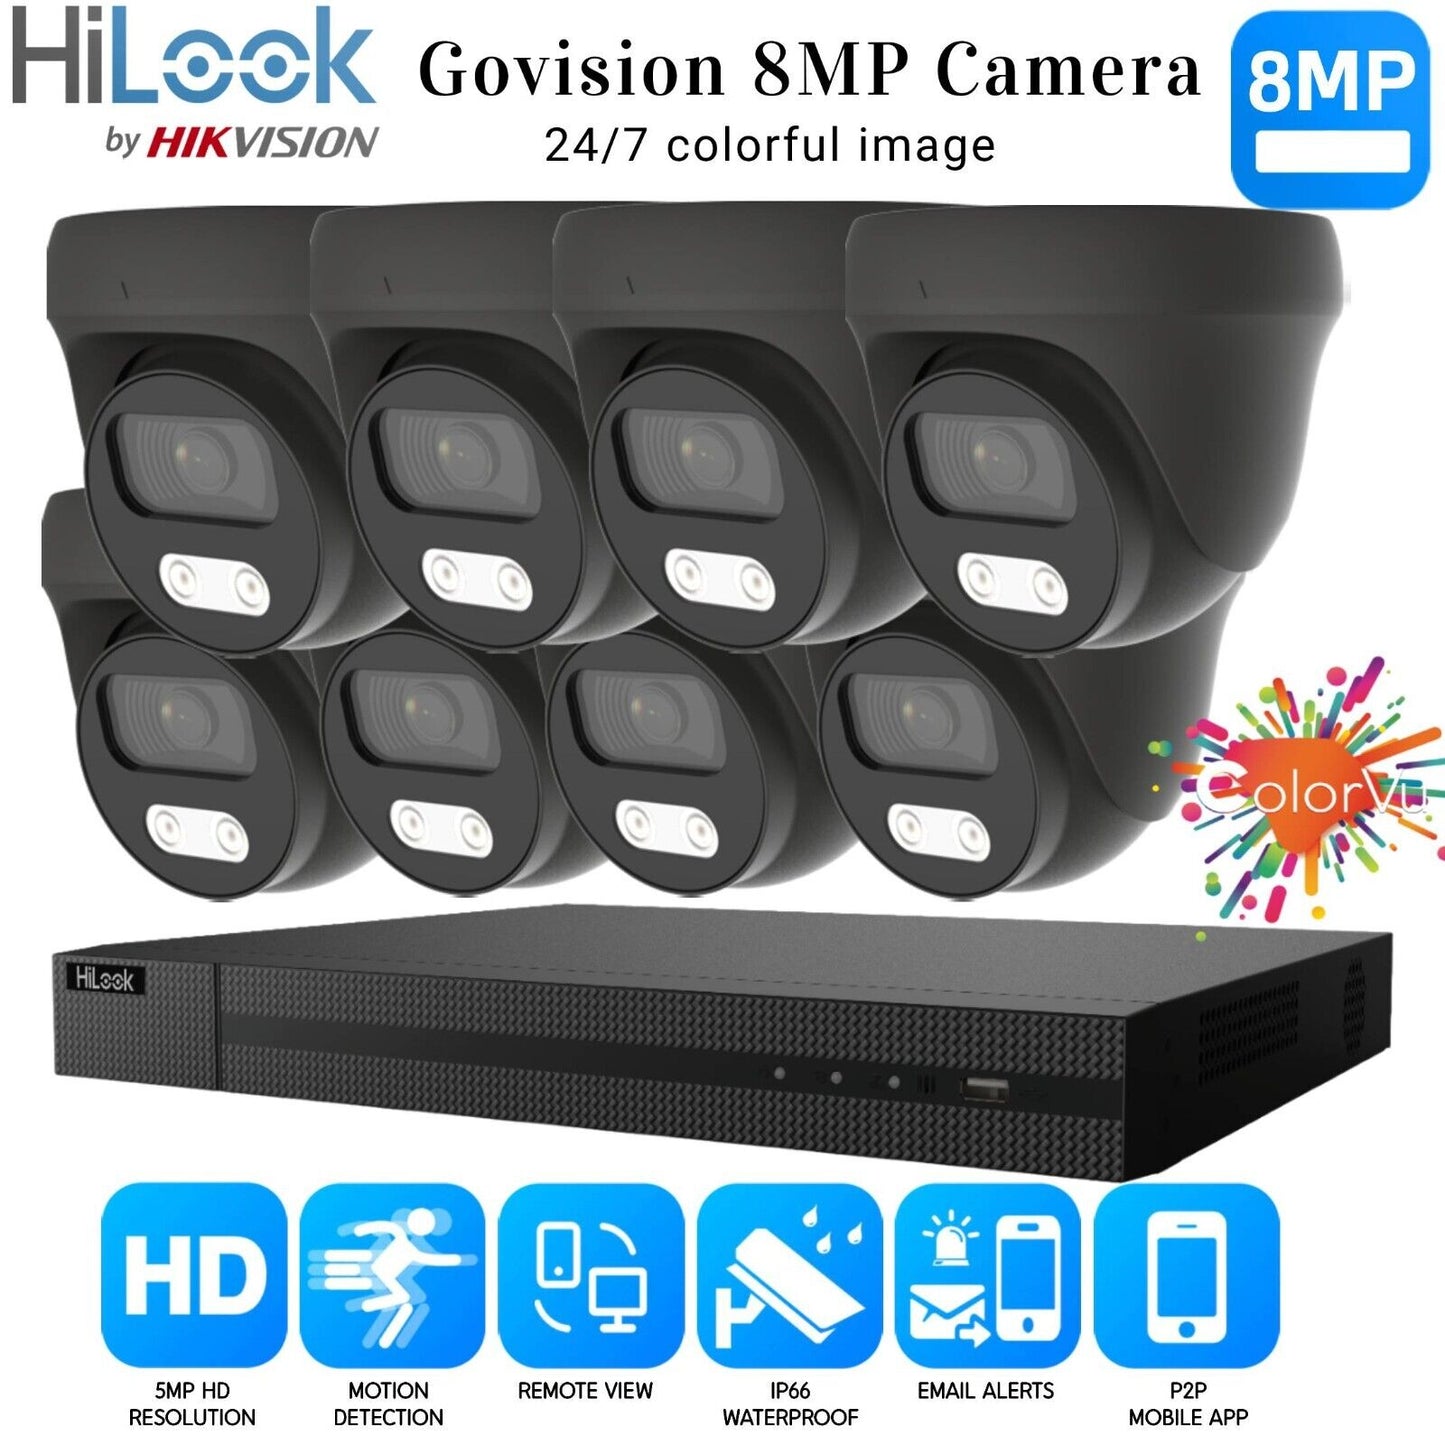 HIKVISION 4K COLORVU CCTV SYSTEM 8MP DVR OUTDOOR NIGHTVISION SECURITY CAMERA KIT 8CH DVR 8xCameras (gray) 6TB HDD